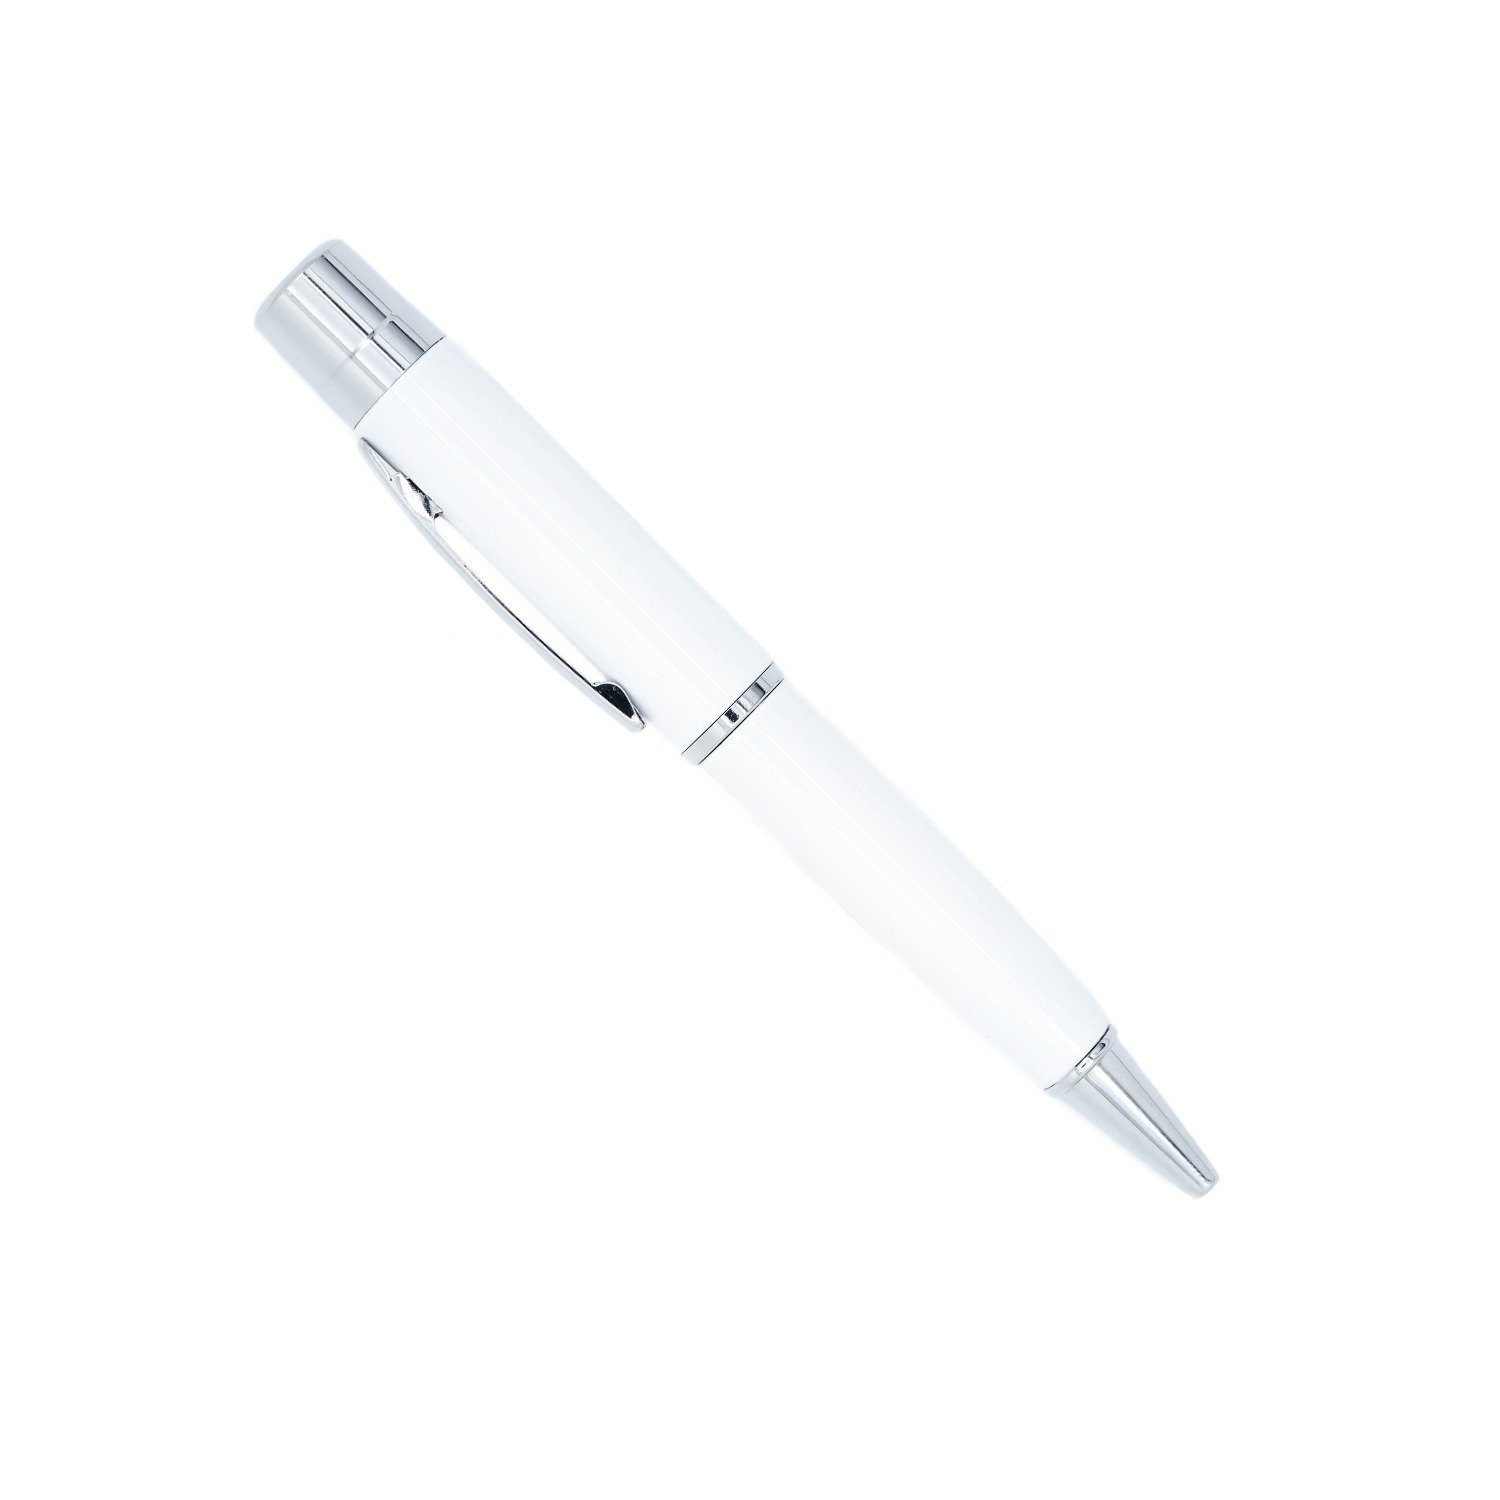 UP-02 Pen Flash Drive แฟลชไดร์ฟปากกา